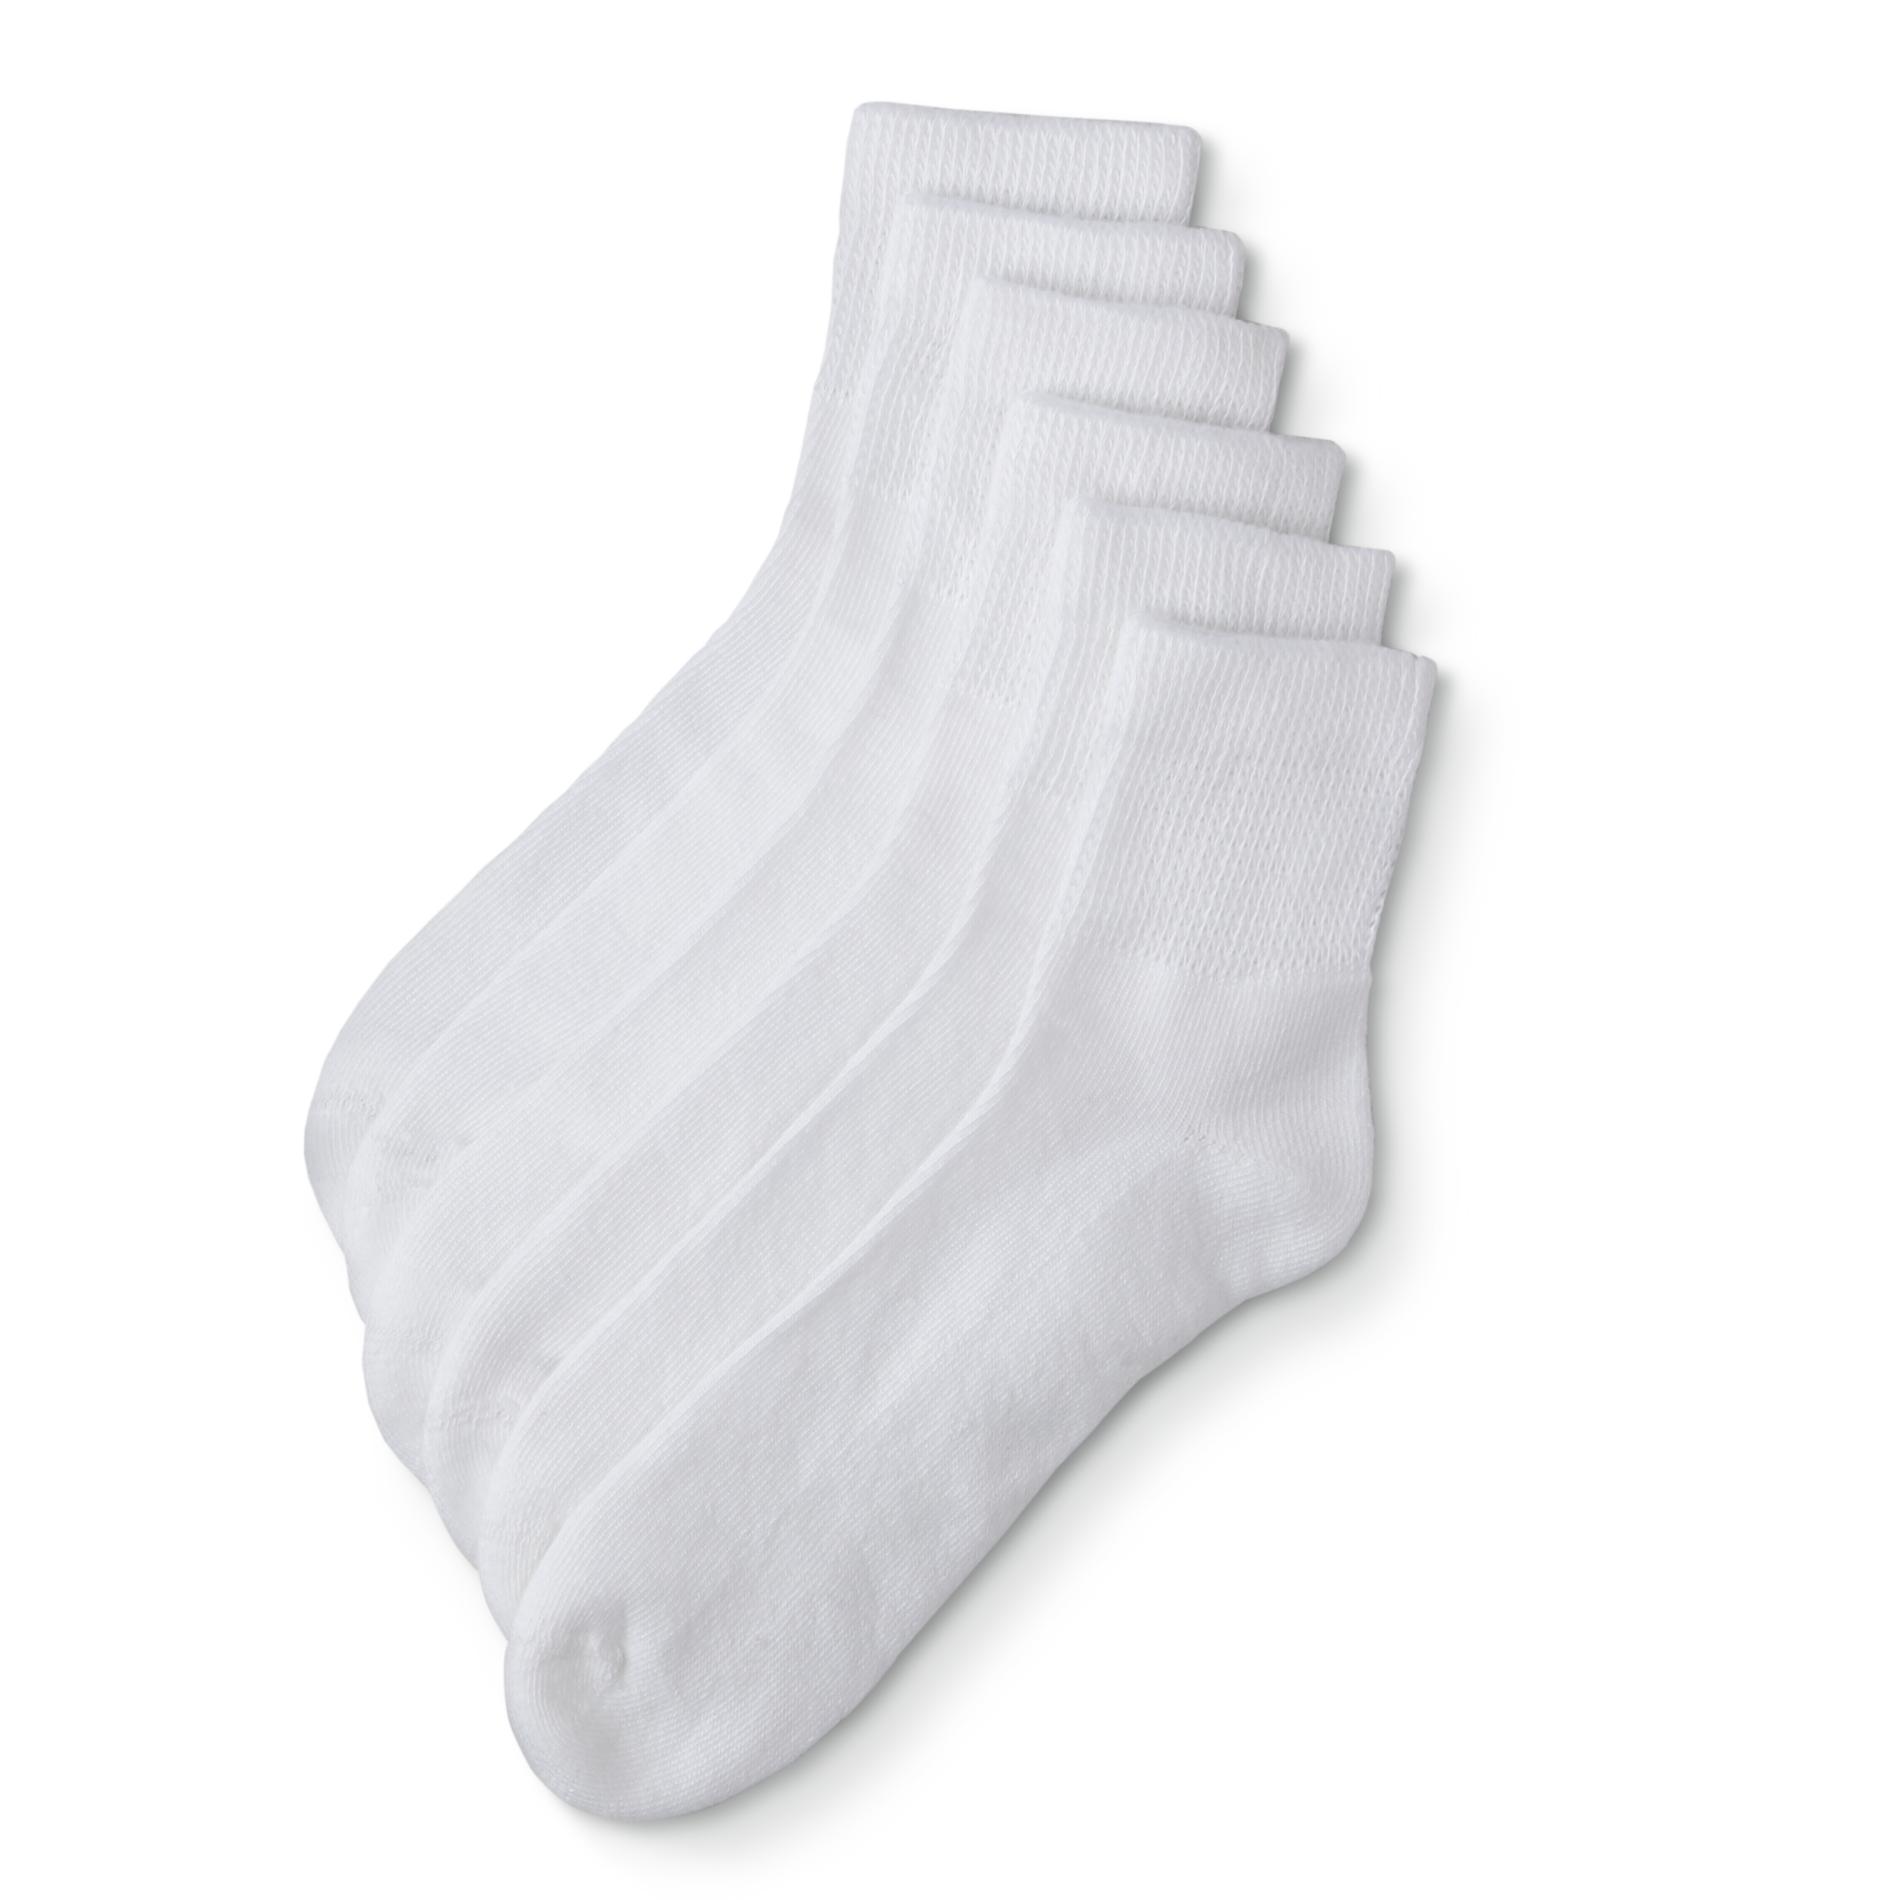 Simply Styled Men's 6-Pairs Diabetic Quarter Socks